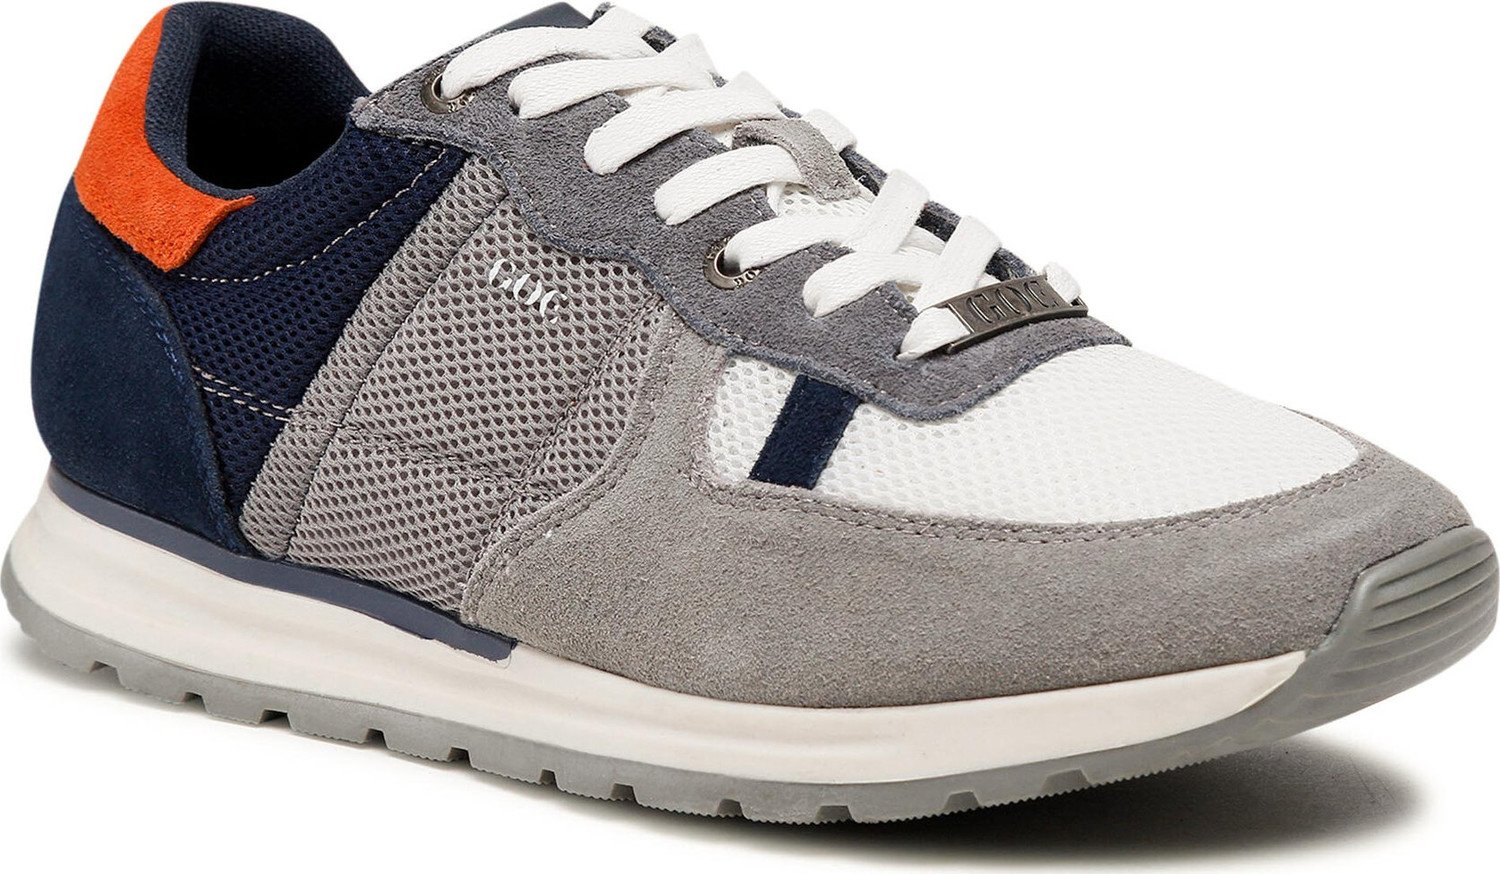 Sneakersy GOE JJ1N4003 Grey/White/Navy